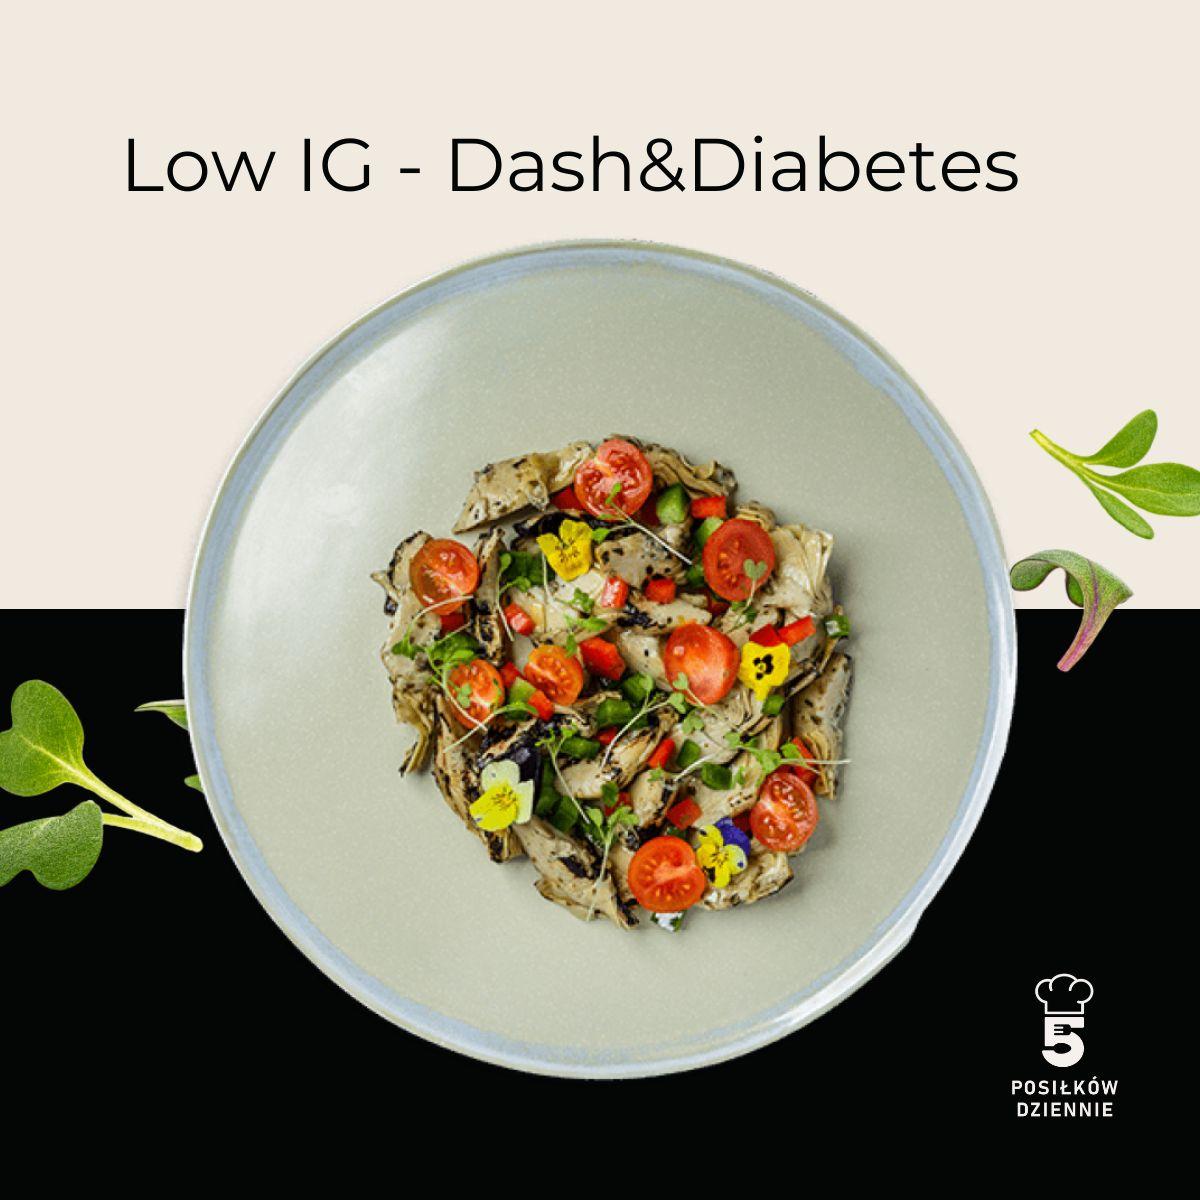 LOW IG - DASH & DIABETES